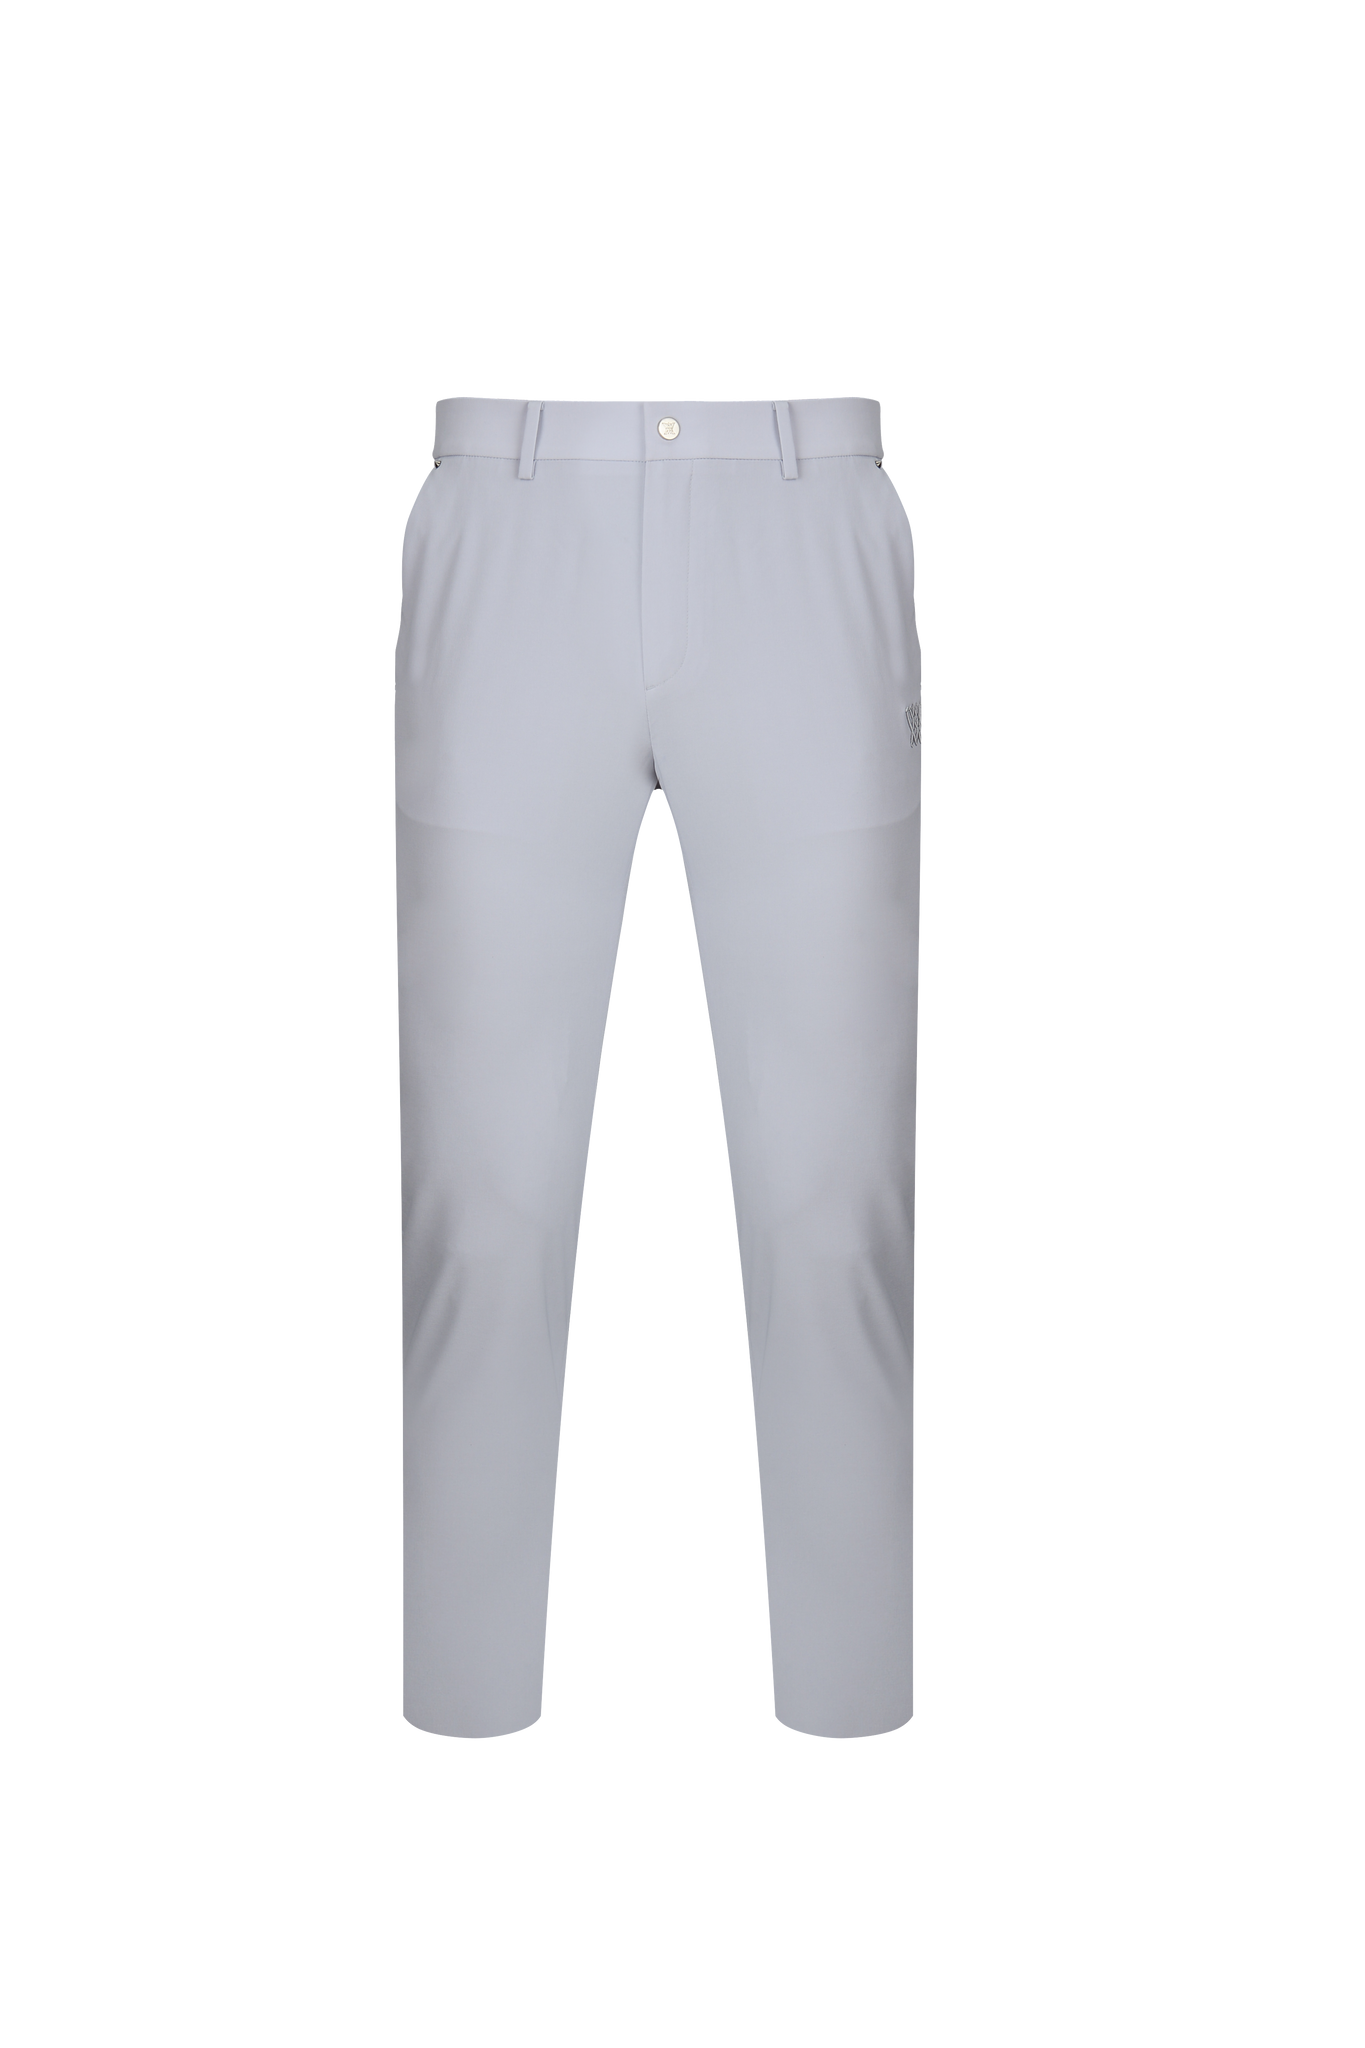 [Special Deal] Men's Waistband Stud Pants